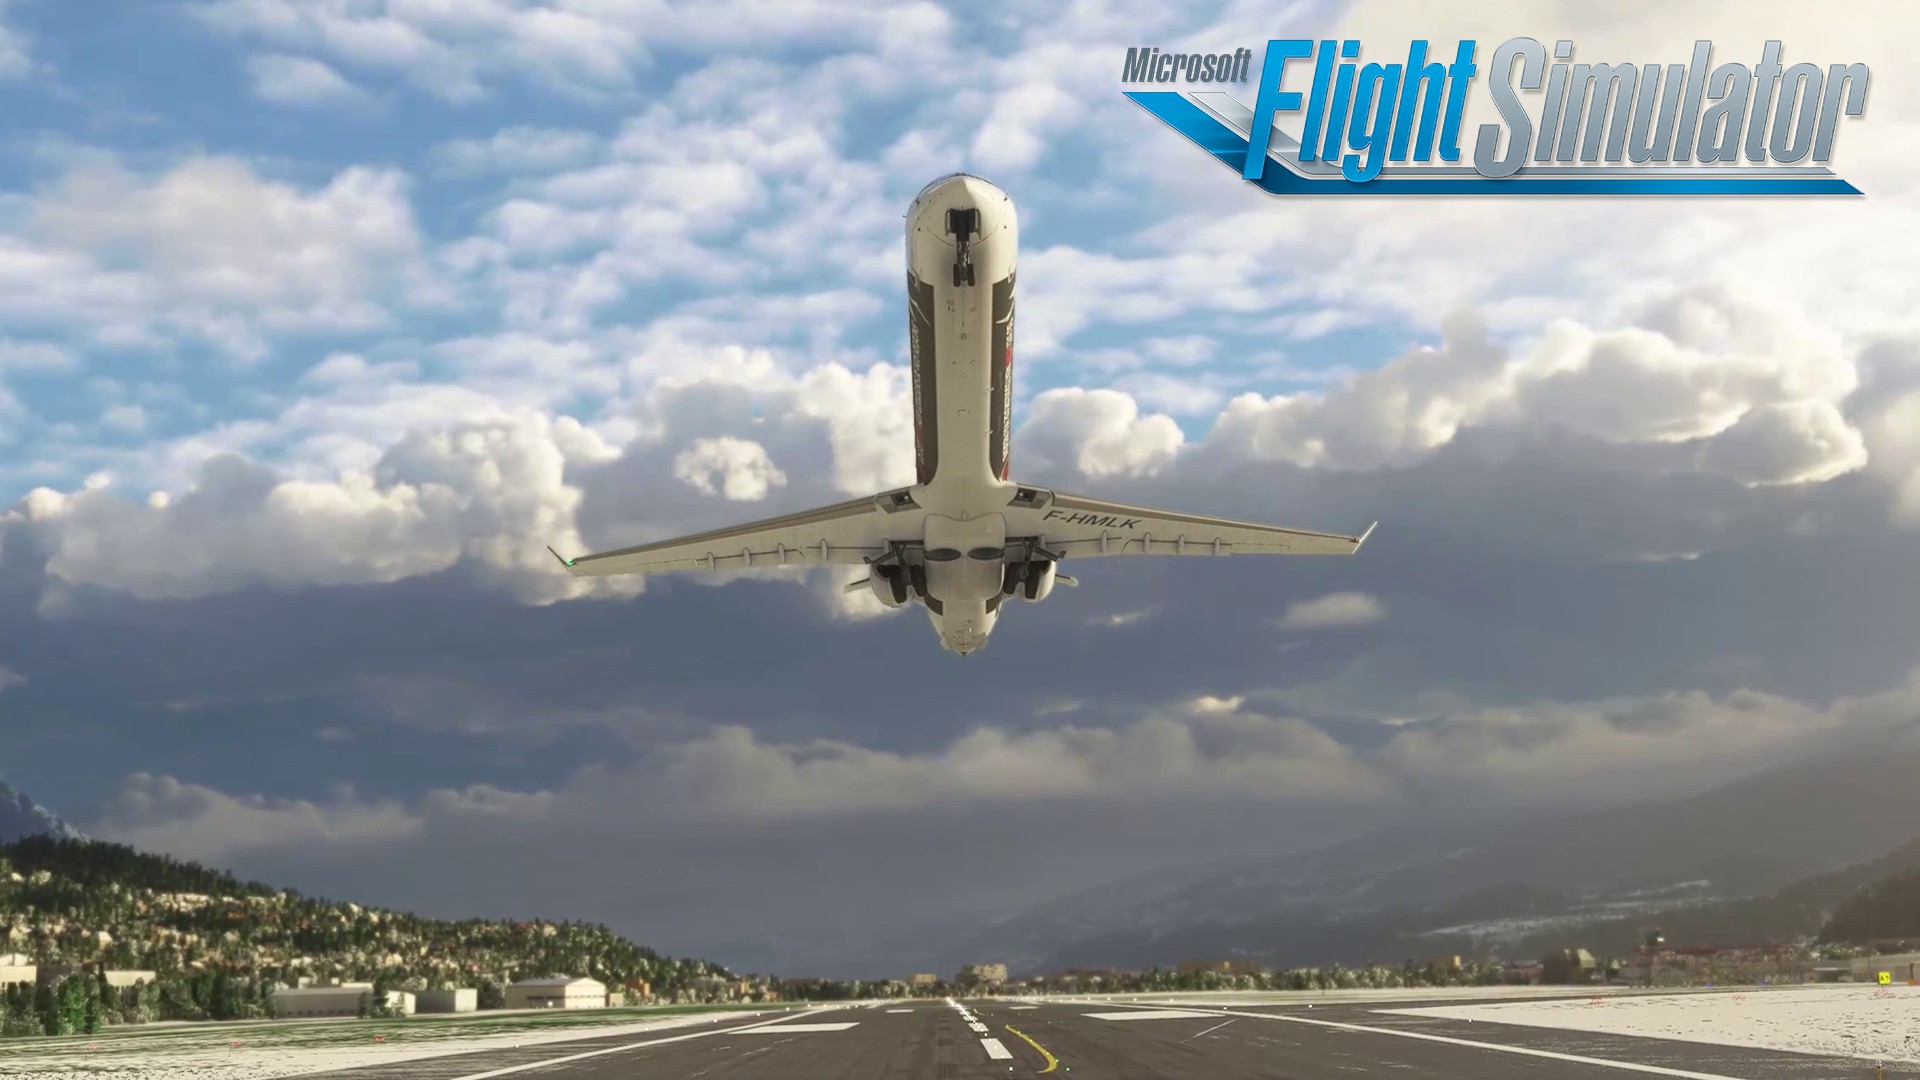 Video For Microsoft Flight Simulator Announces Release of the New Aerosoft CRJ 900/1000